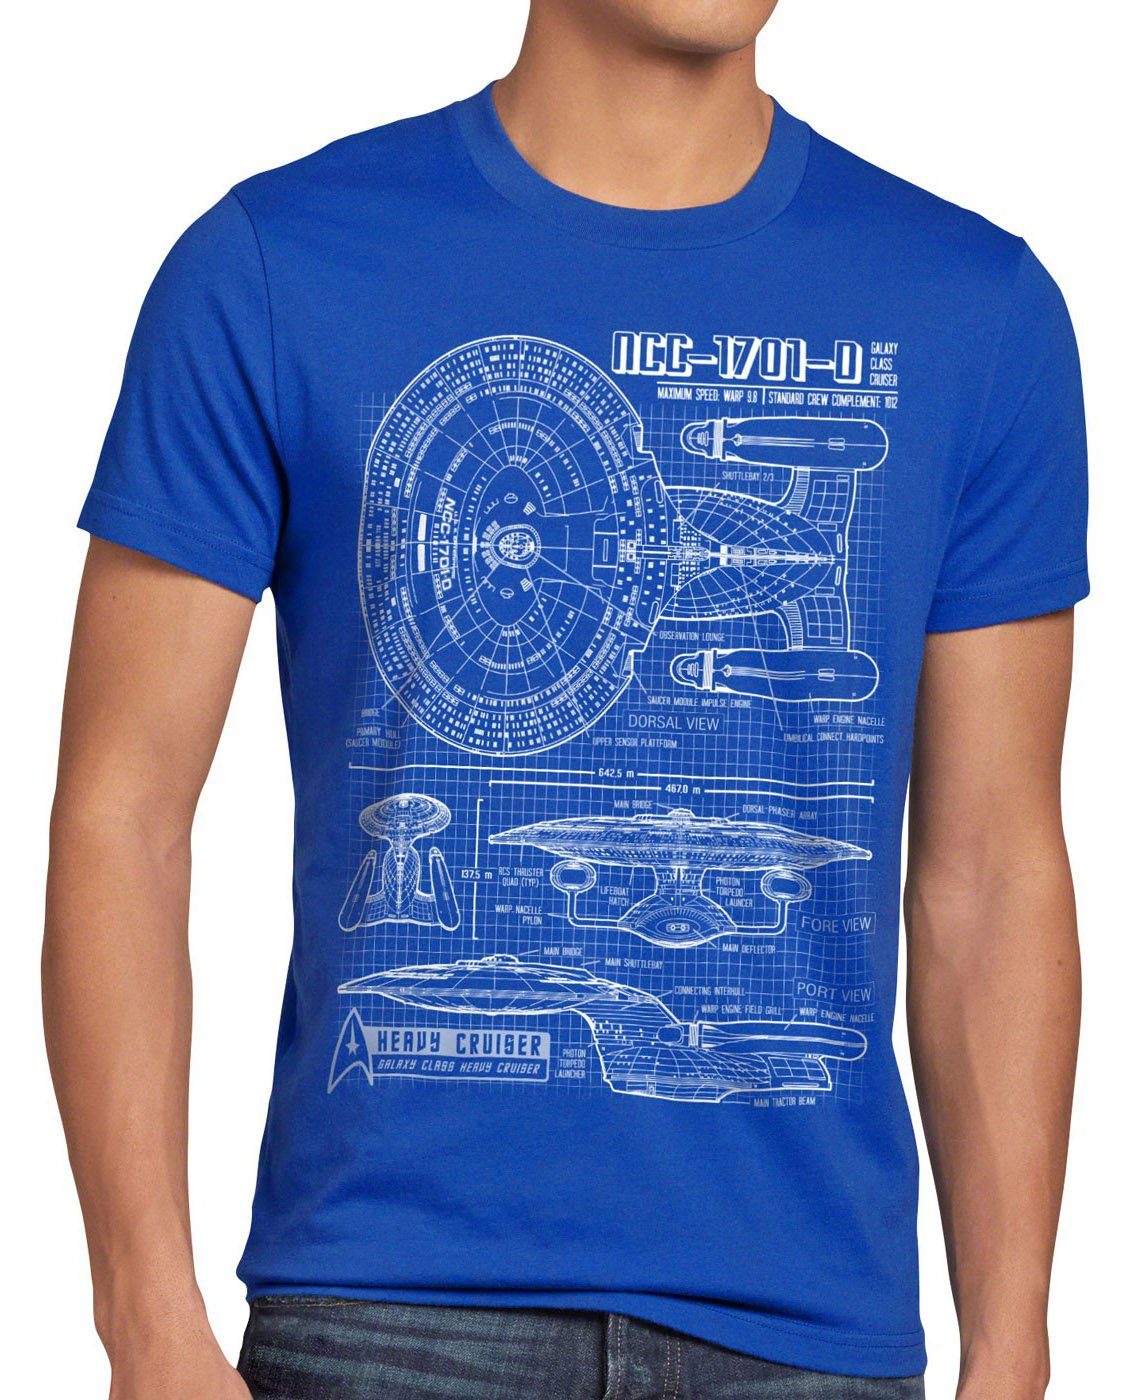 style3 Print-Shirt Herren T-Shirt NC-1701D Enterprise Blaupause trek trekkie star jean luc picard